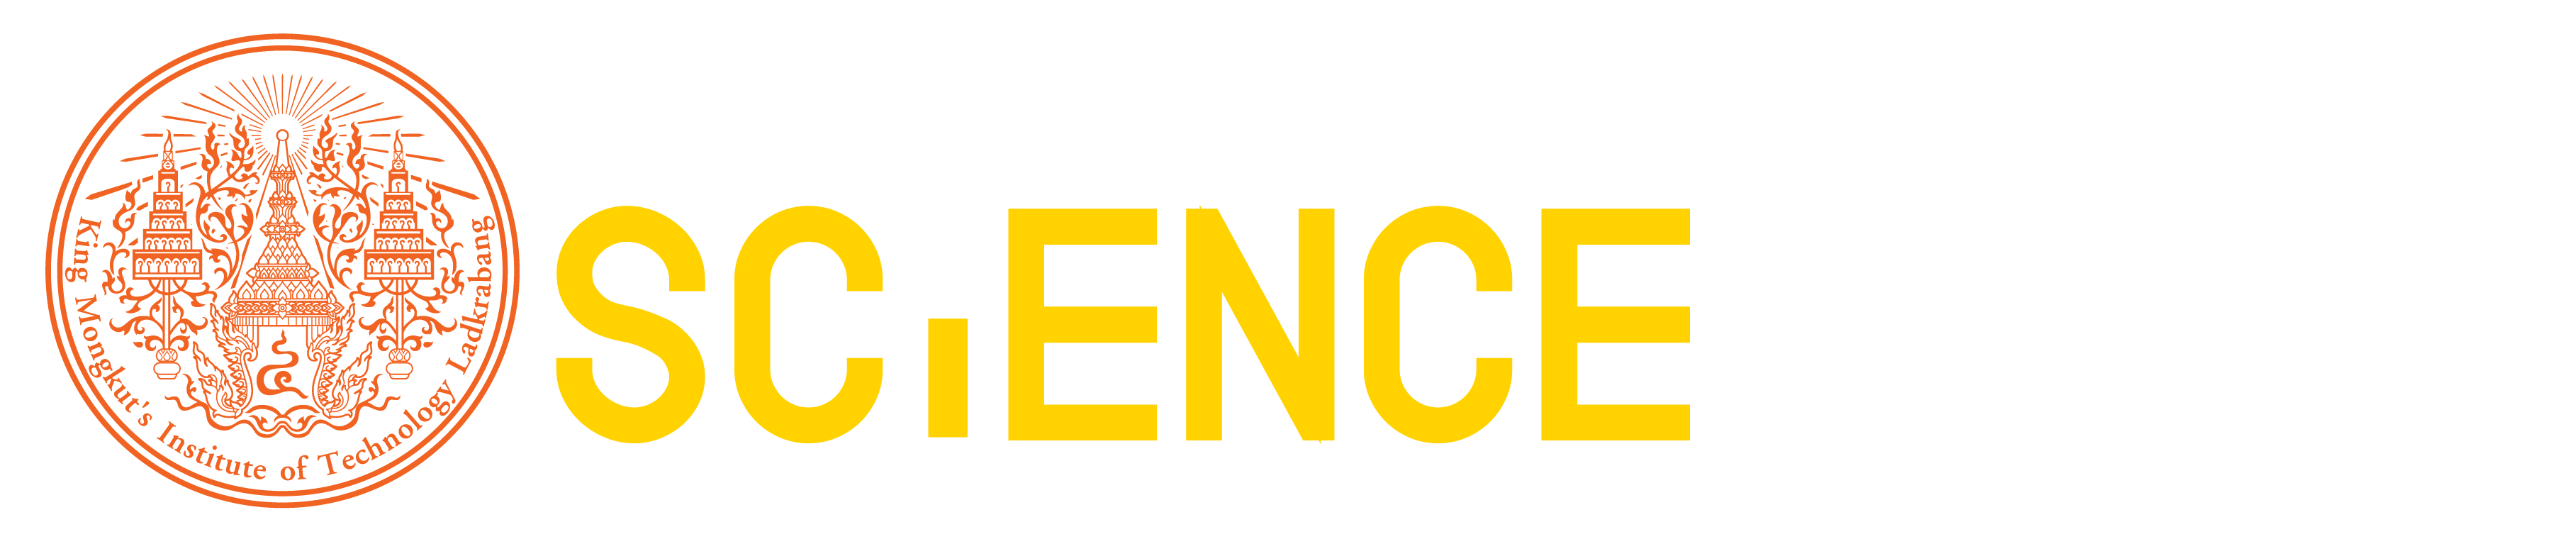 Sci KMITL logo